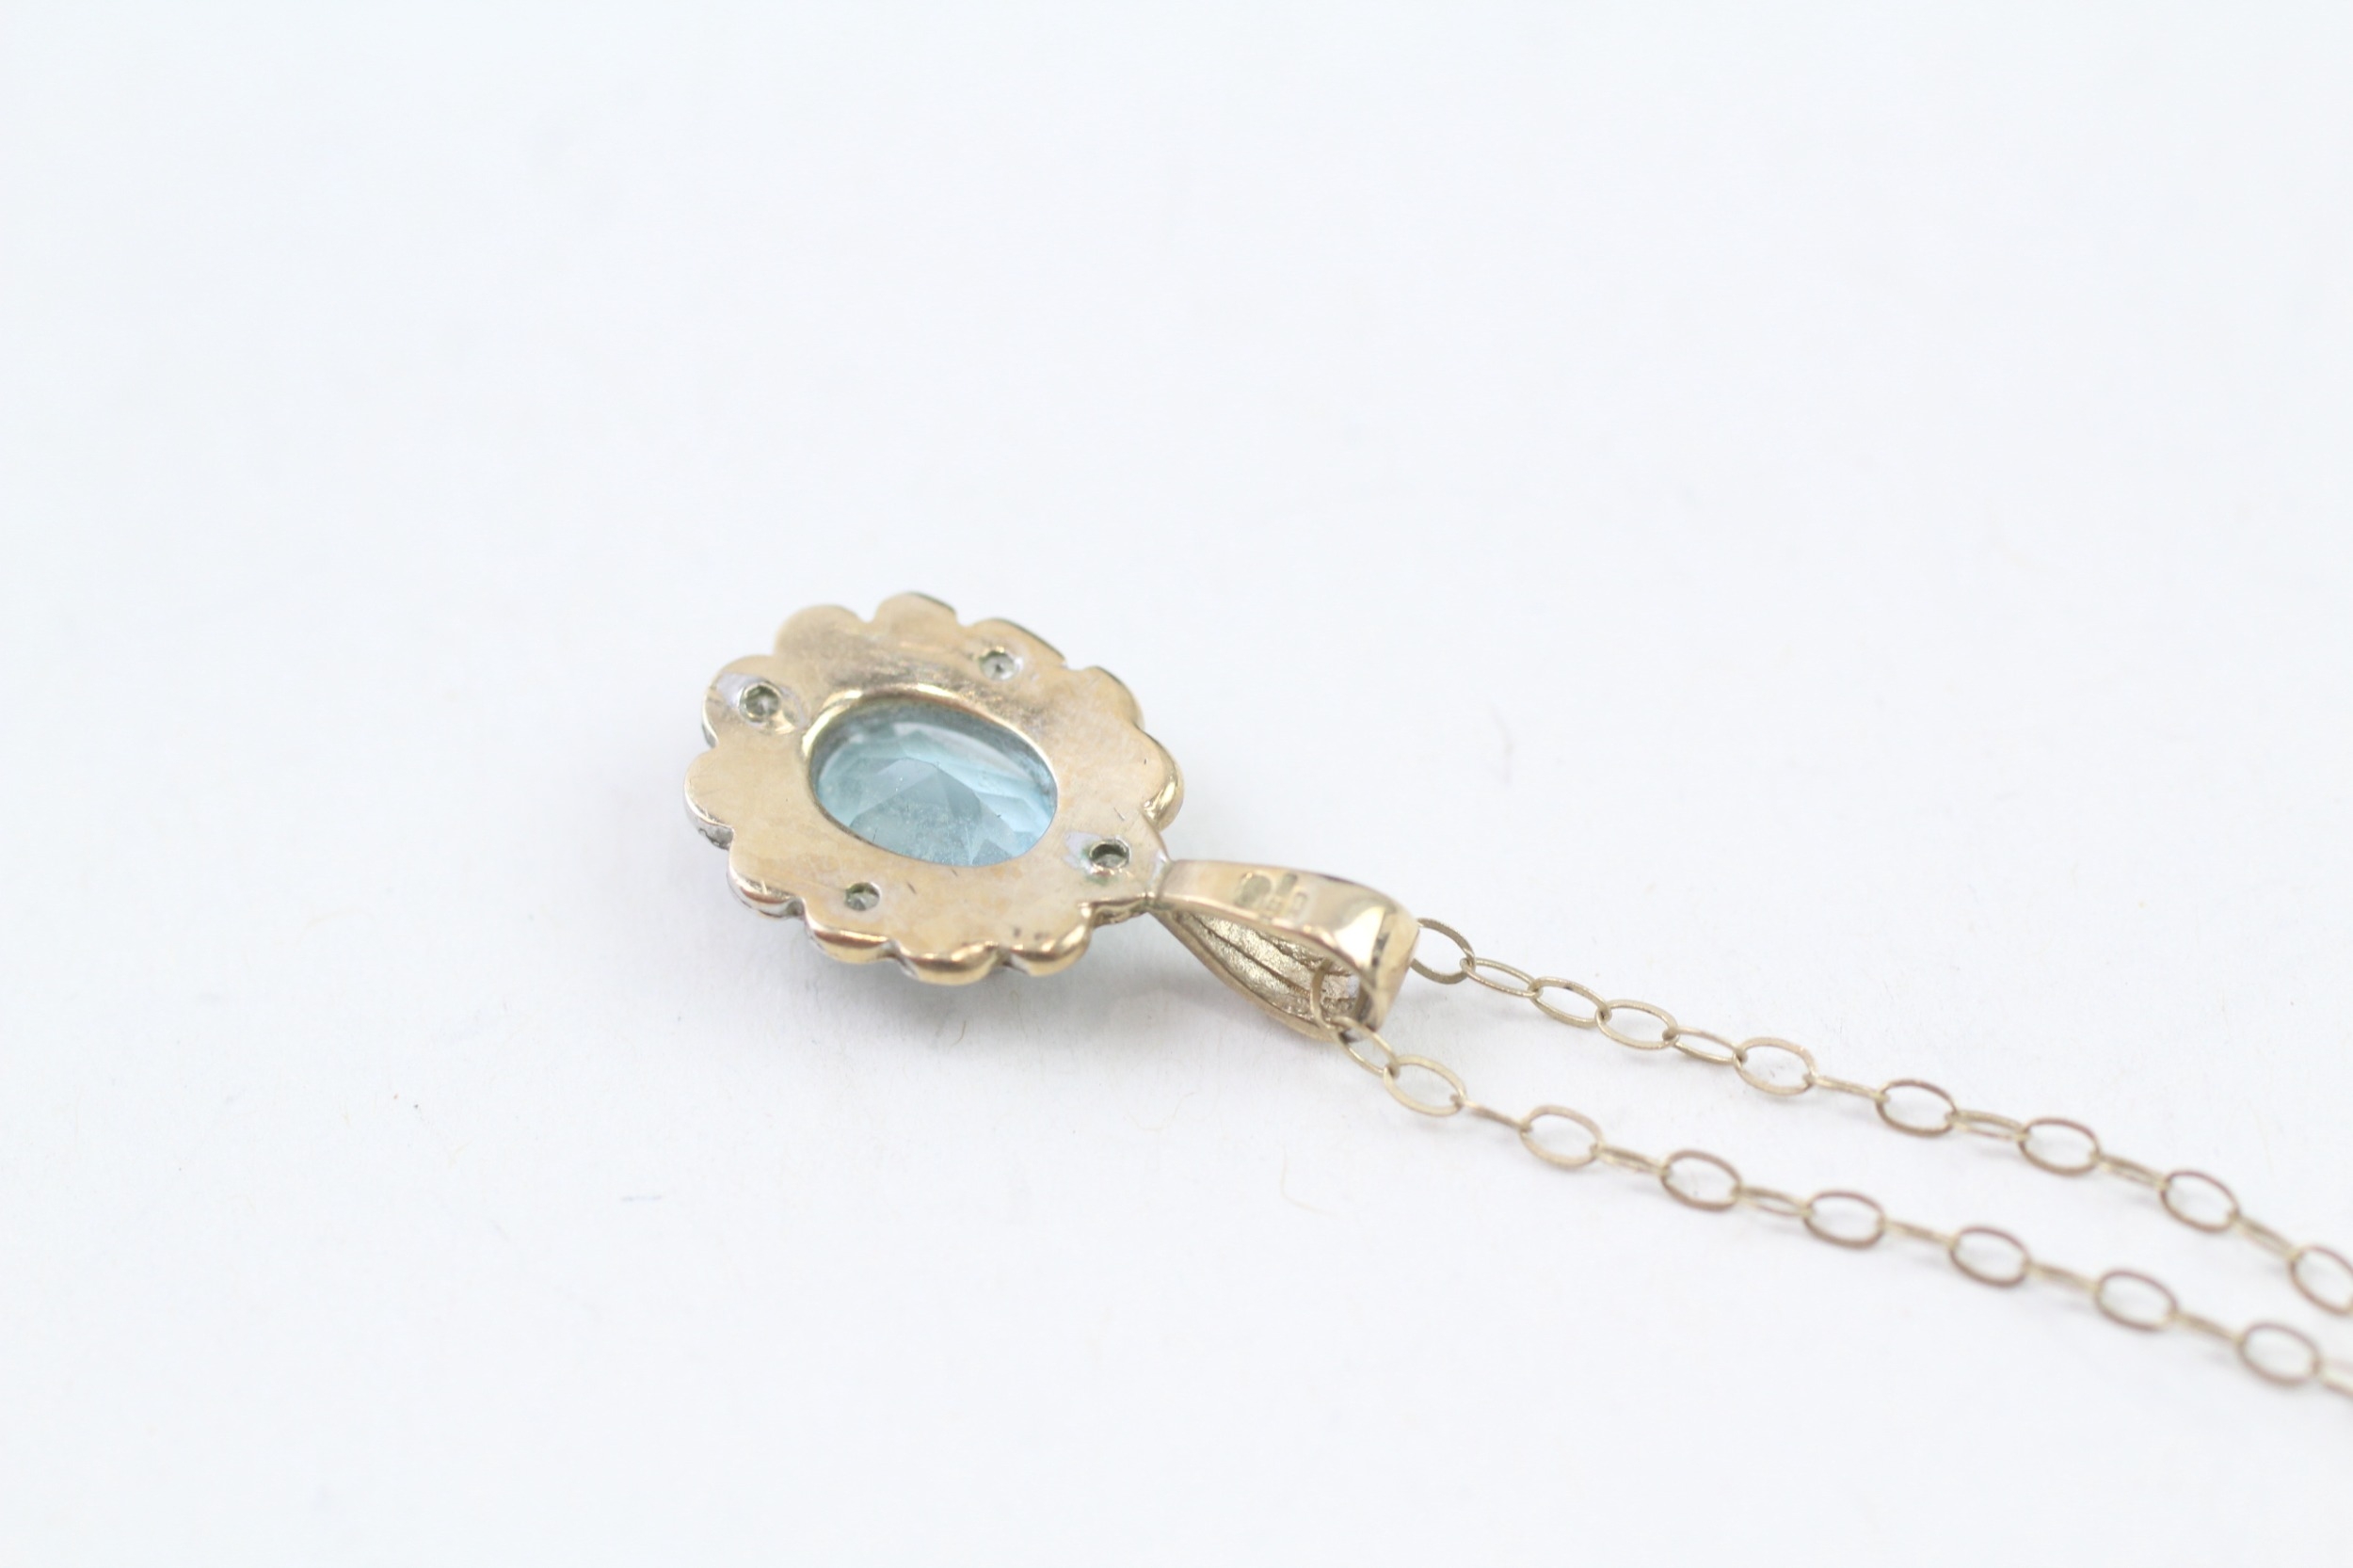 9ct gold blue topaz & diamond cluster pendant & chain (1.3g) - Image 4 of 4